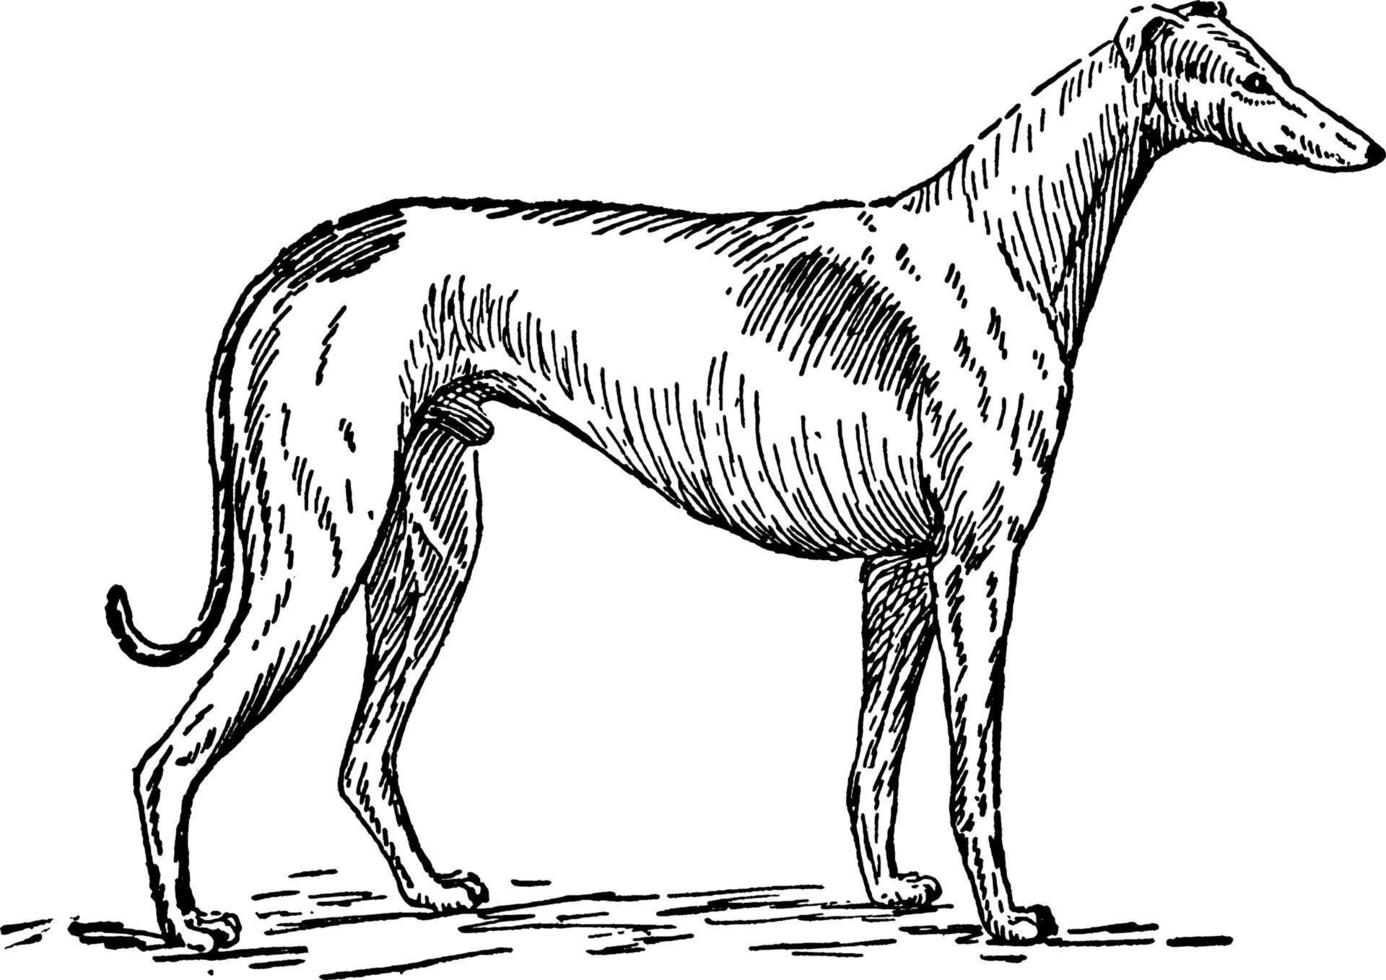 Greyhound, vintage illustration vector